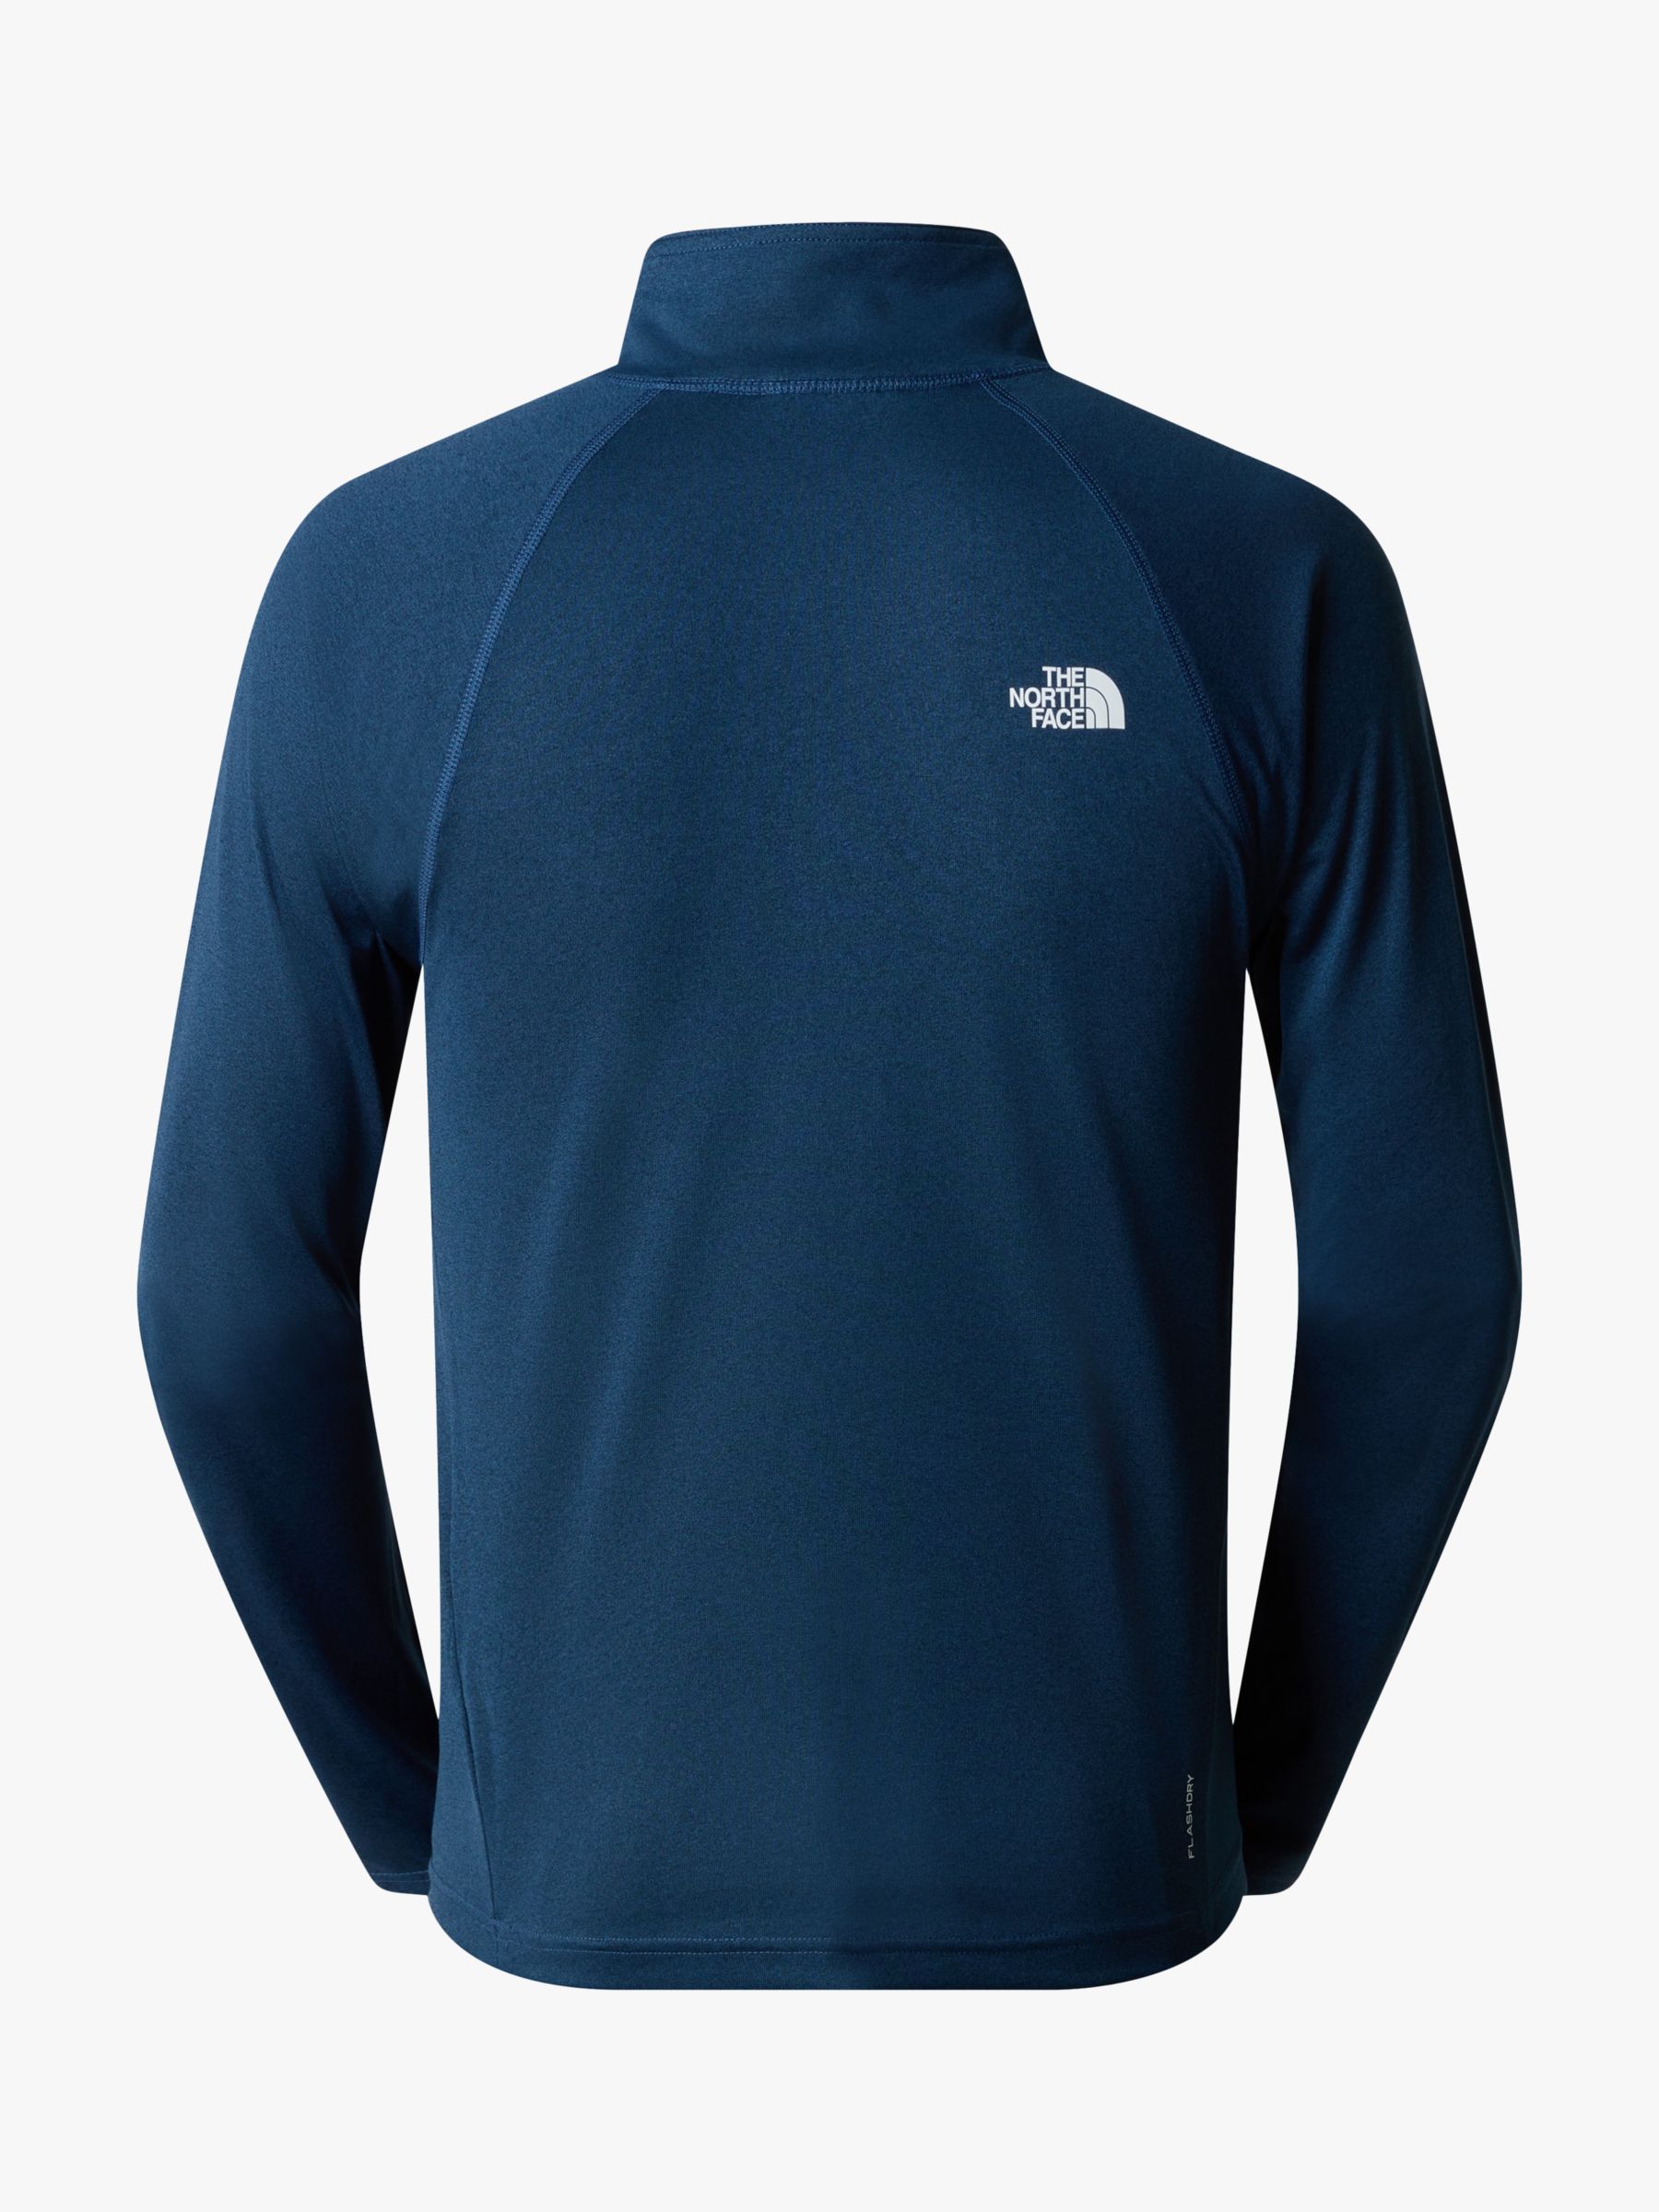 The North Face Flex II 1/4 Zip Long Sleeve T-Shirt, Blue, L